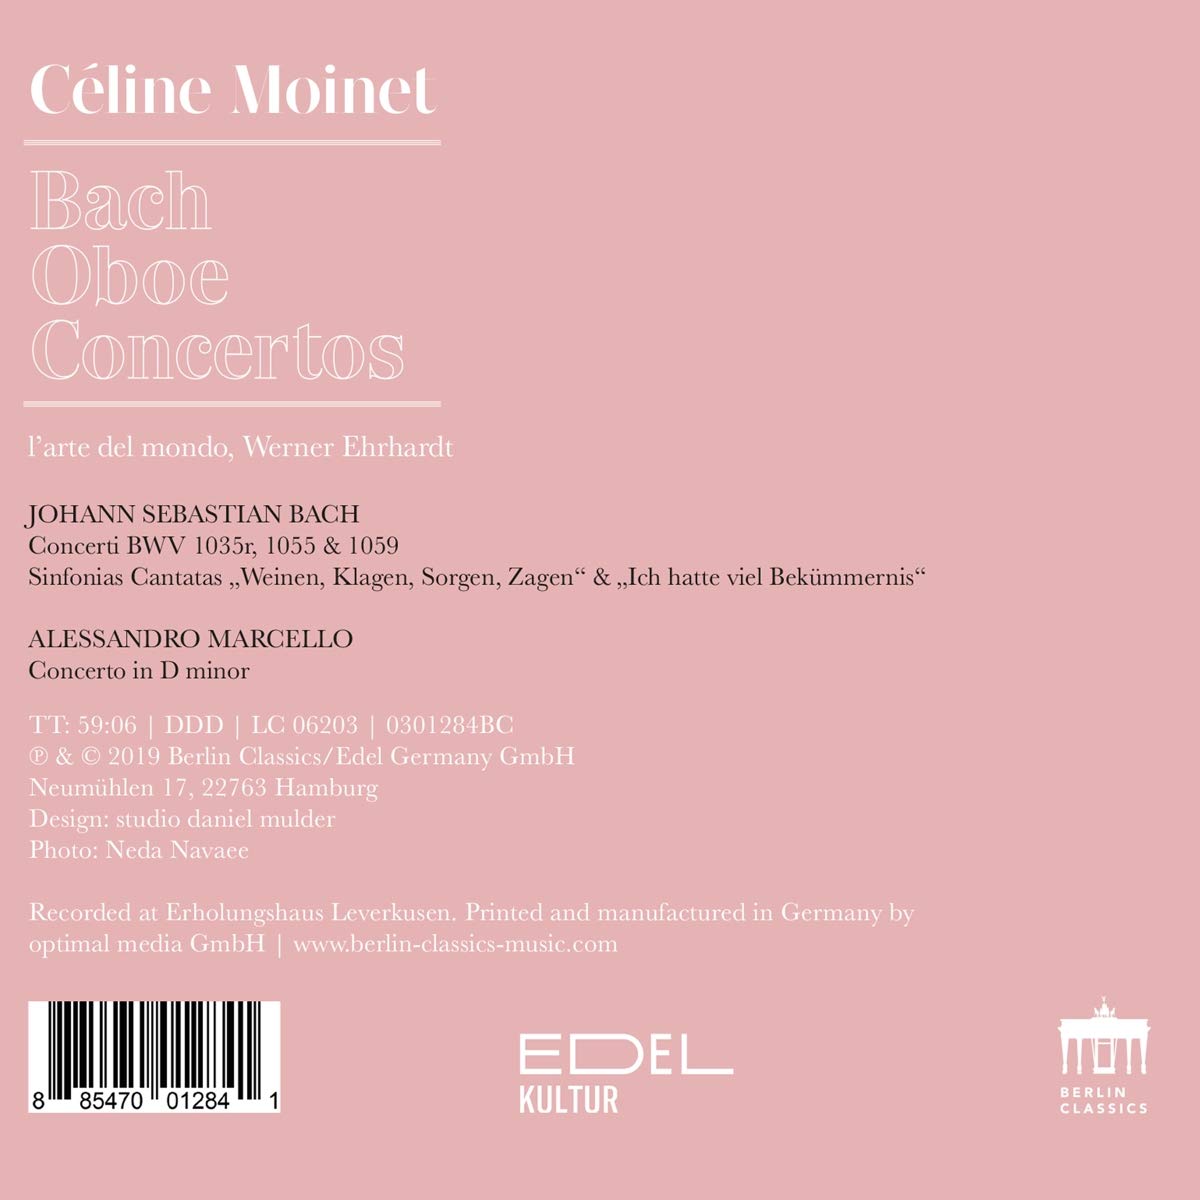 Celine Moinet 바흐 / 마르첼로: 오보에 협주곡 (Bach / Marcello: Oboe Concertos) 